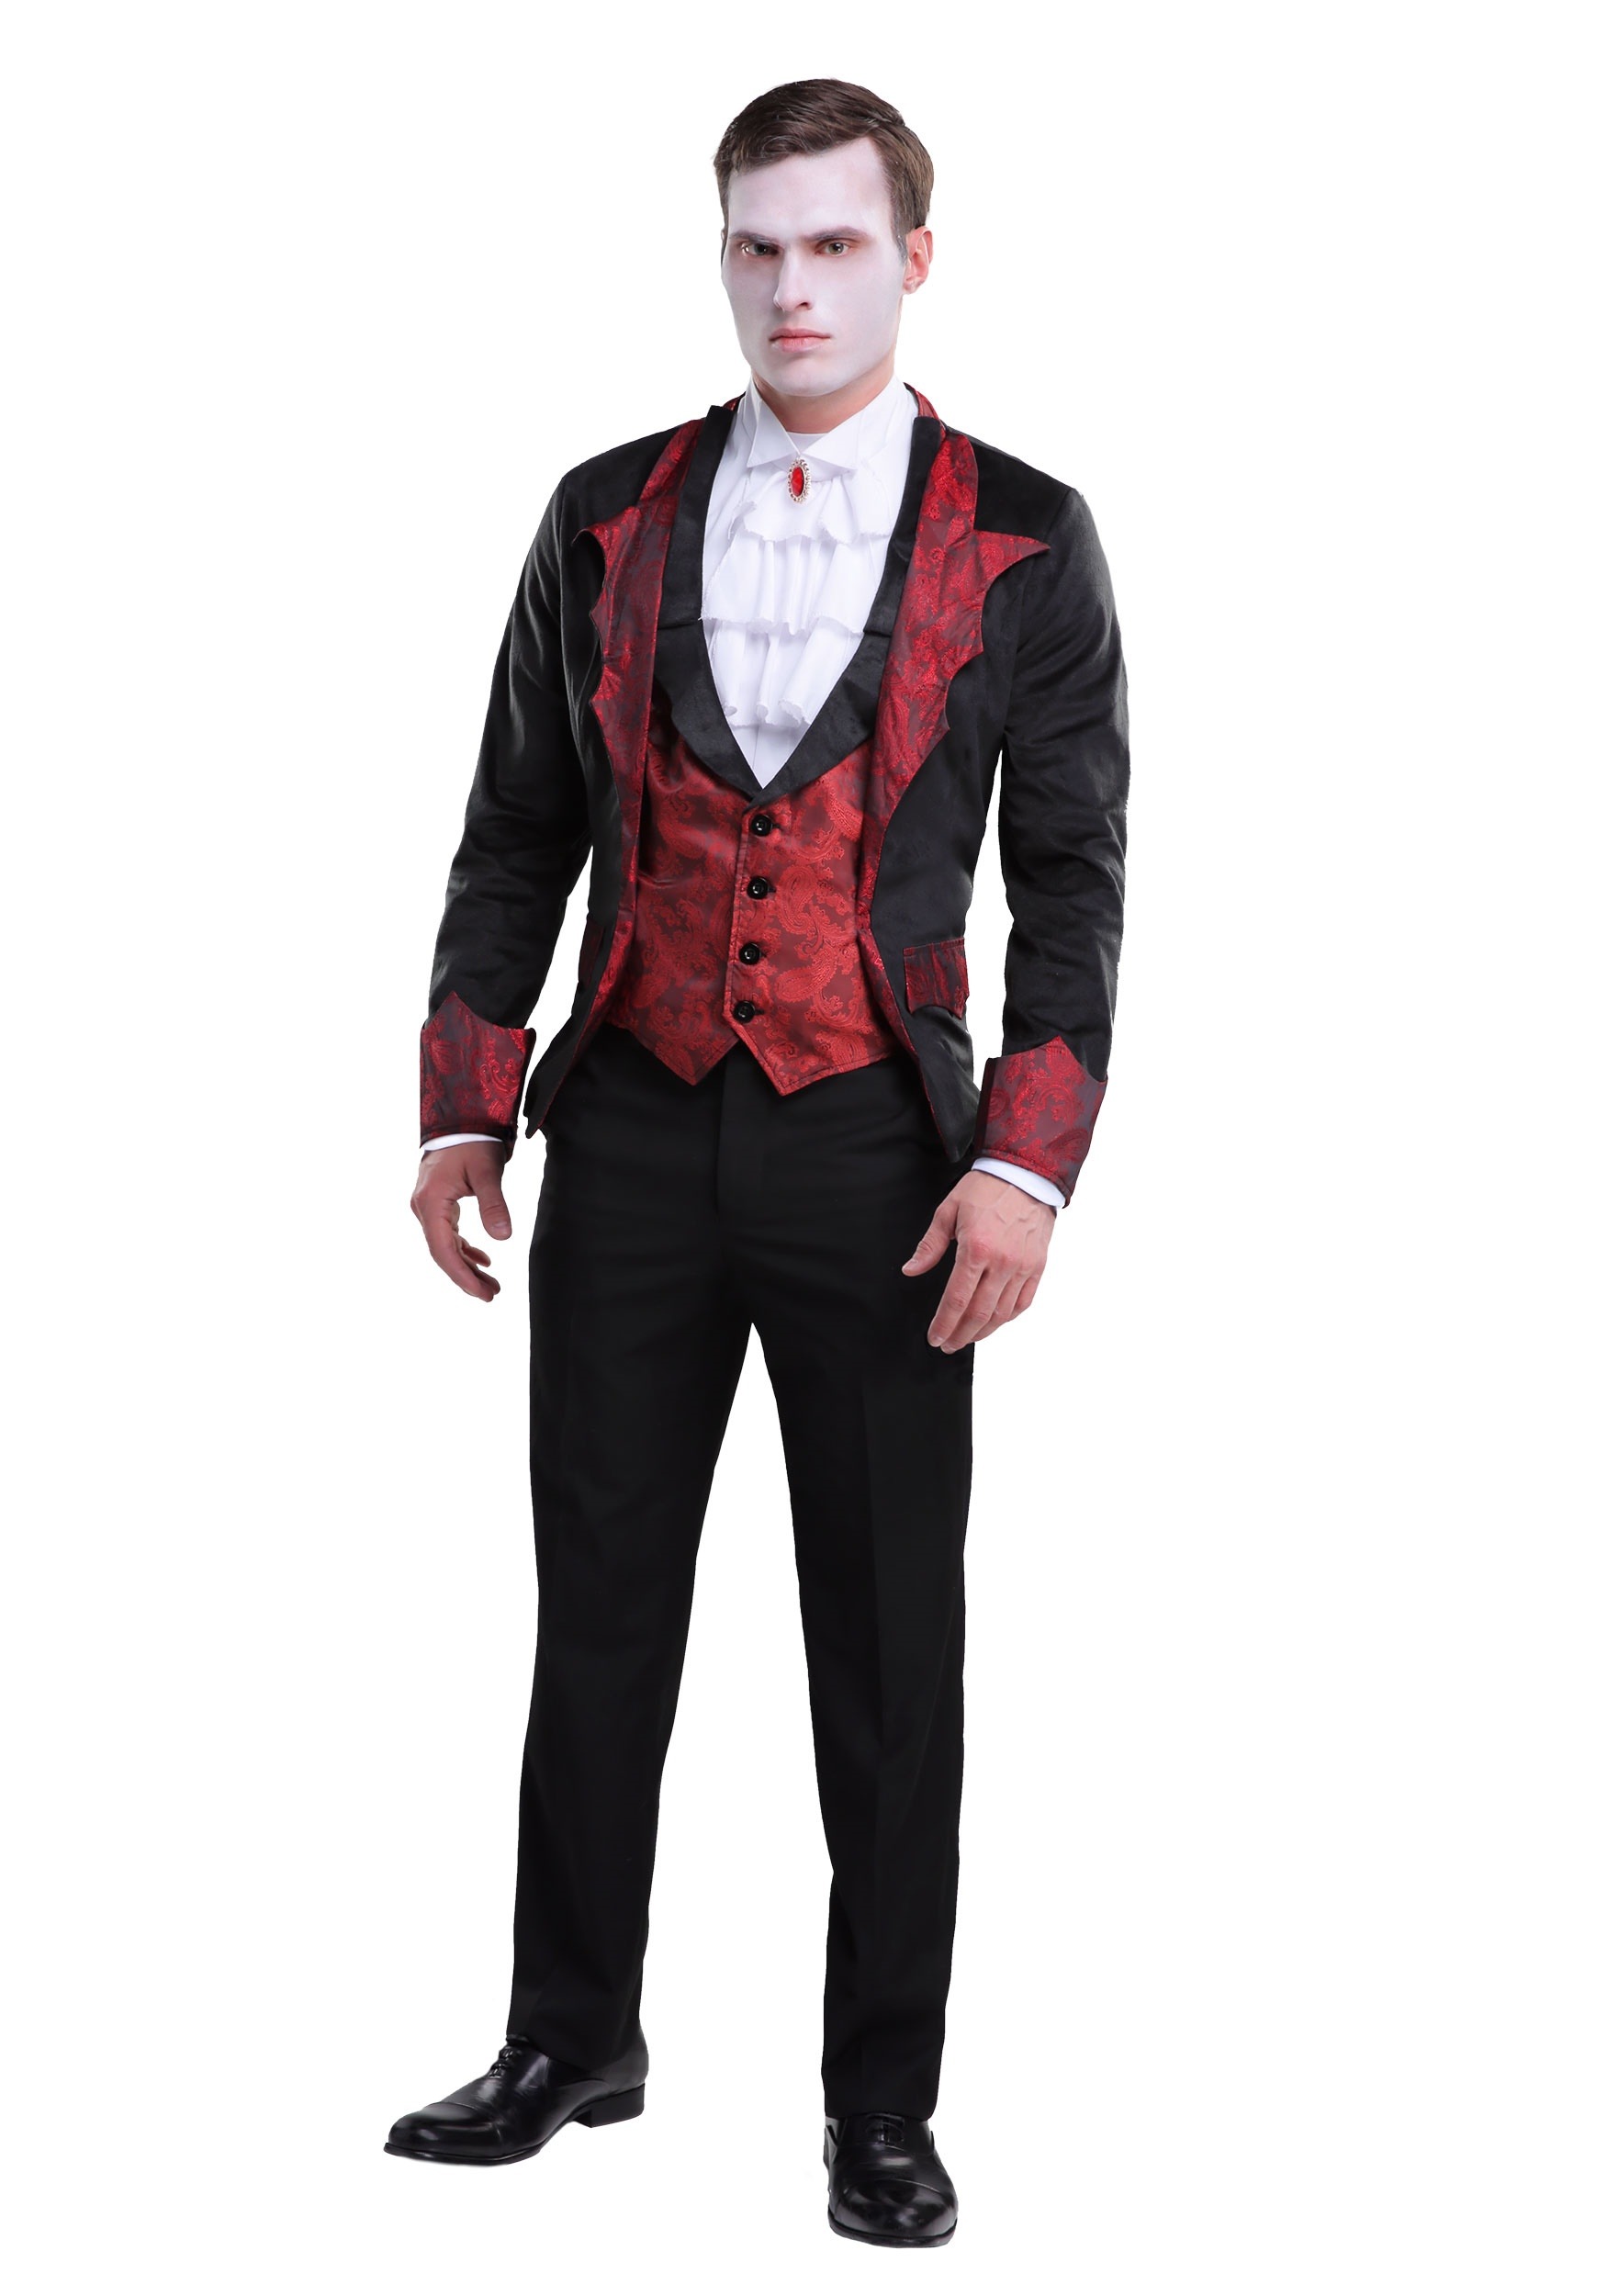 Photos - Fancy Dress FUN Costumes Dashing Vampire Costume for Men Black/Red/White FUN37